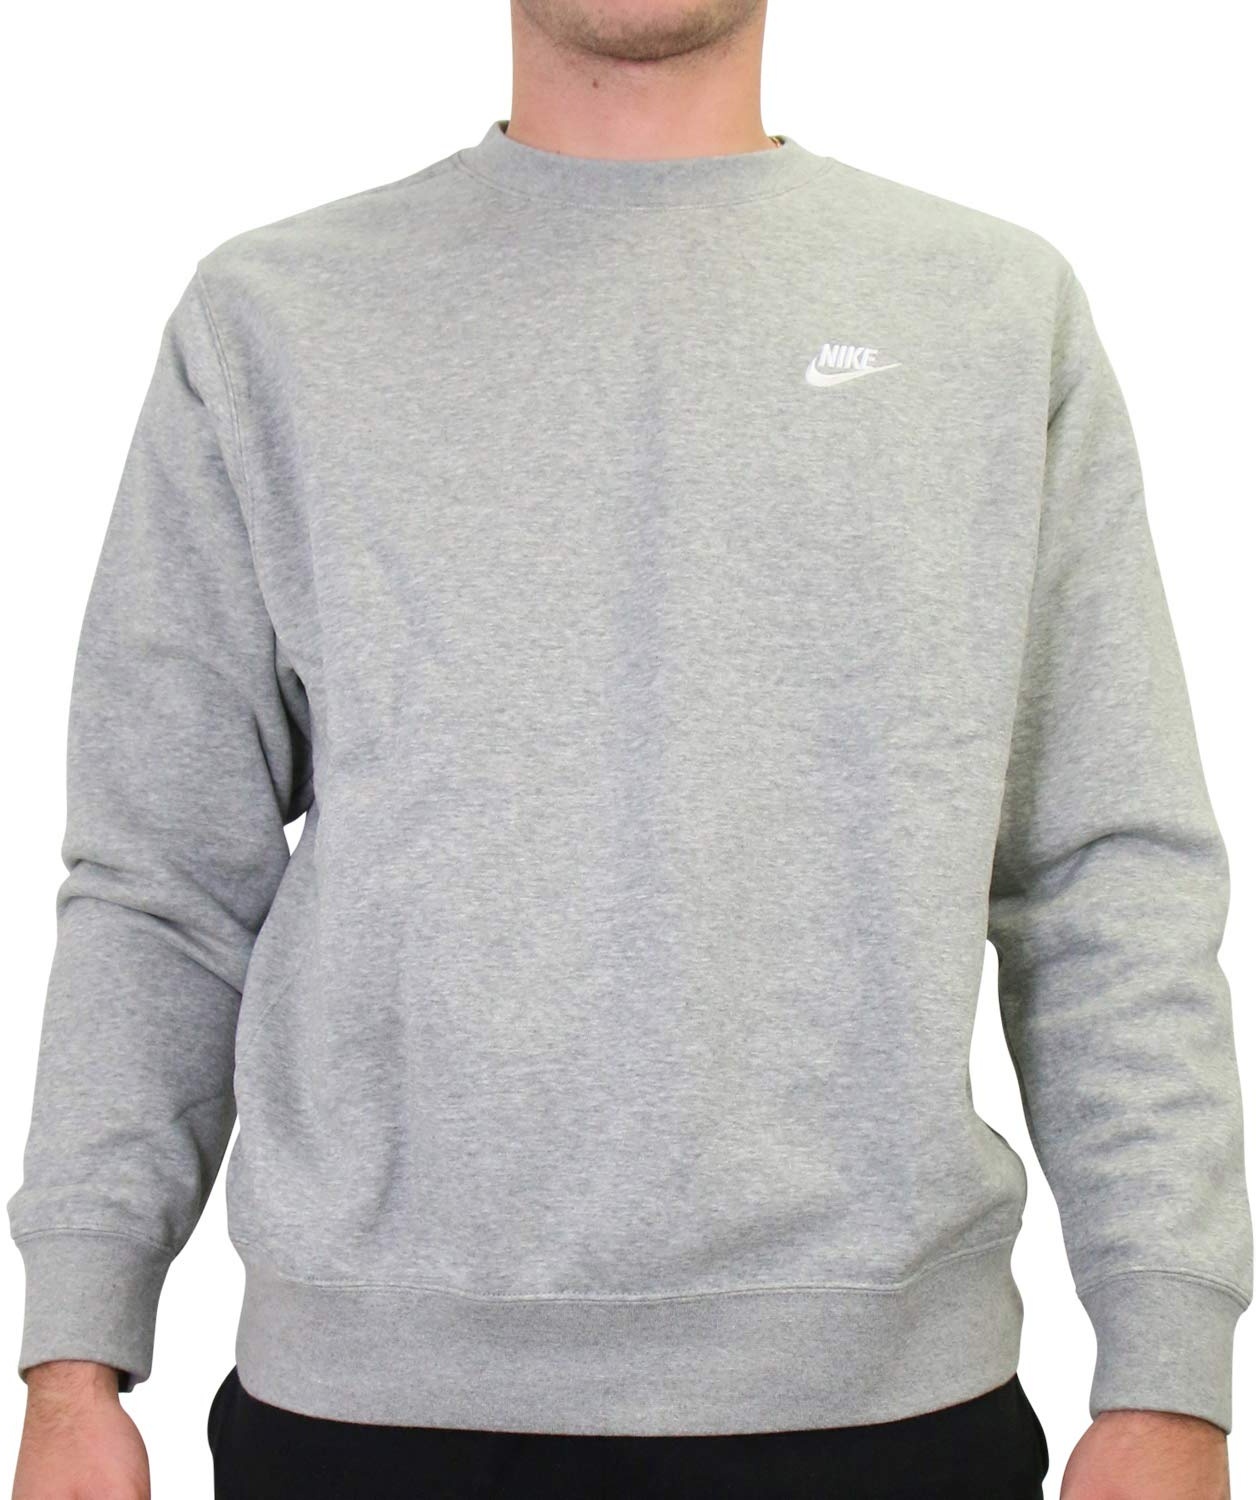 Nike Herren M NSW CLUB CRW BB 804340 Long Sleeved T-shirt, grau (dk grey heather), M